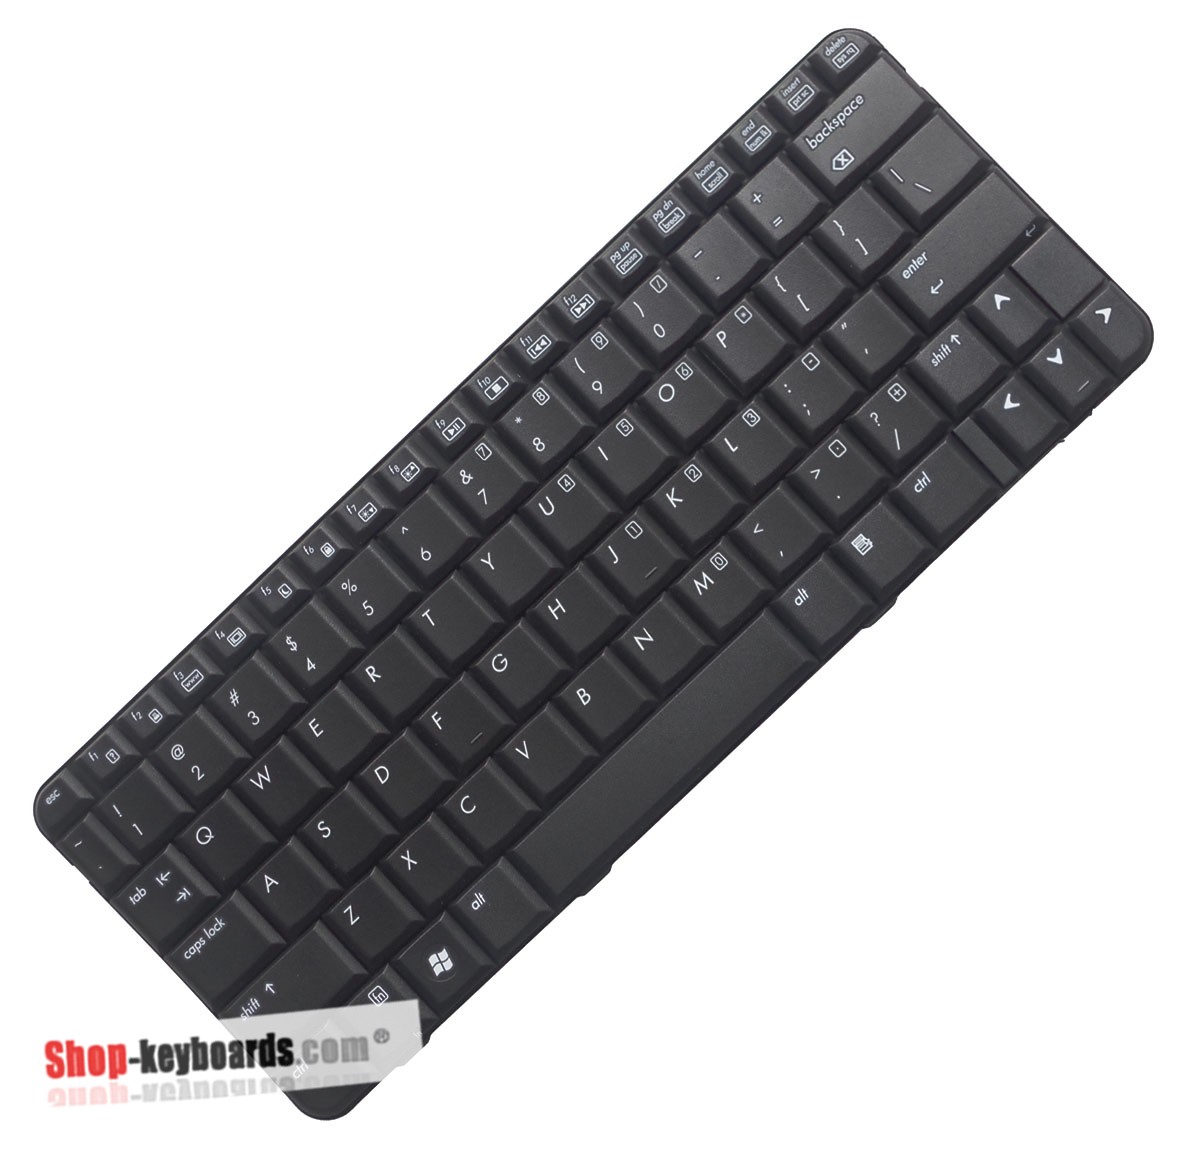 Compaq Presario CQ20 Keyboard replacement